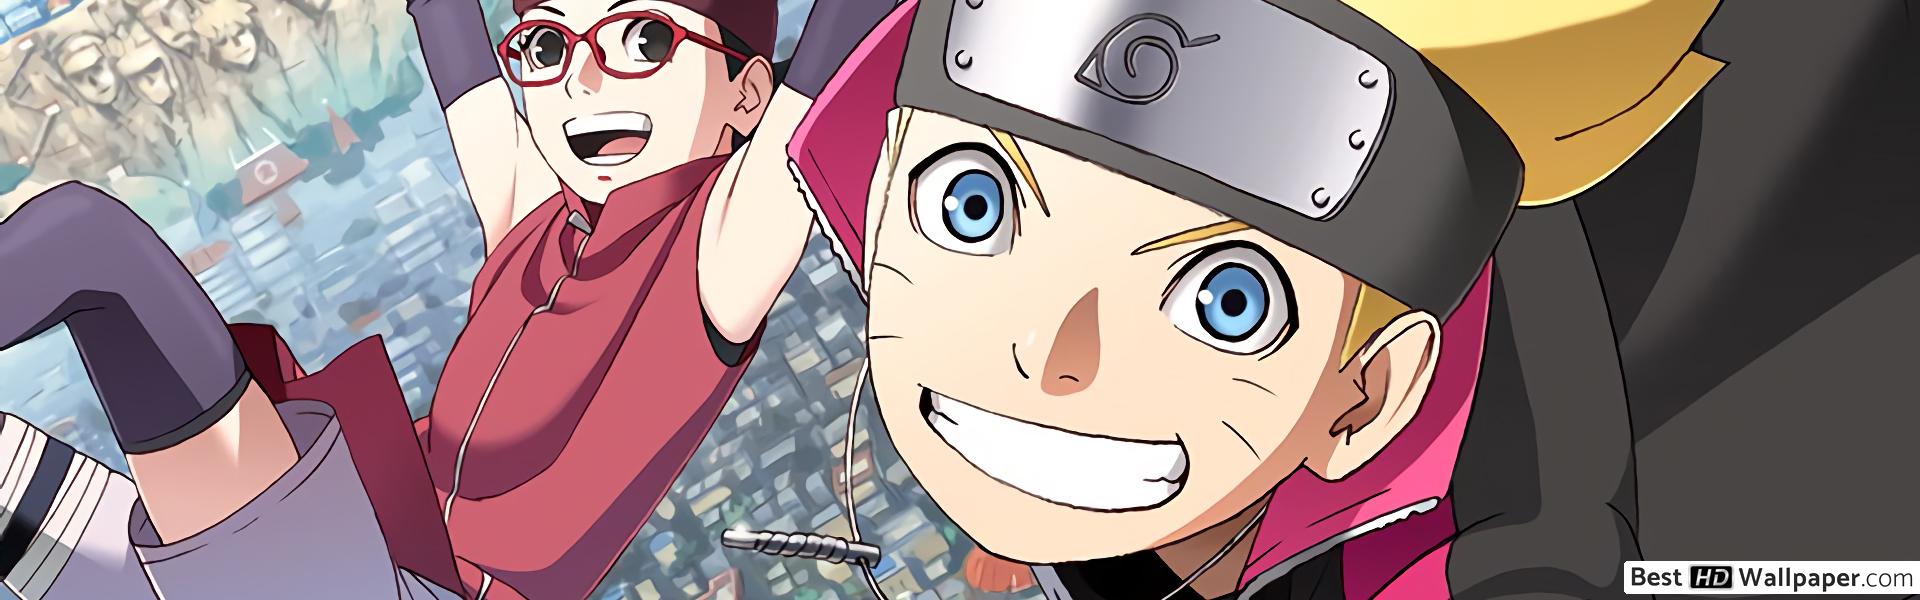 Boruto, Naruto Next Generation out HD wallpaper download